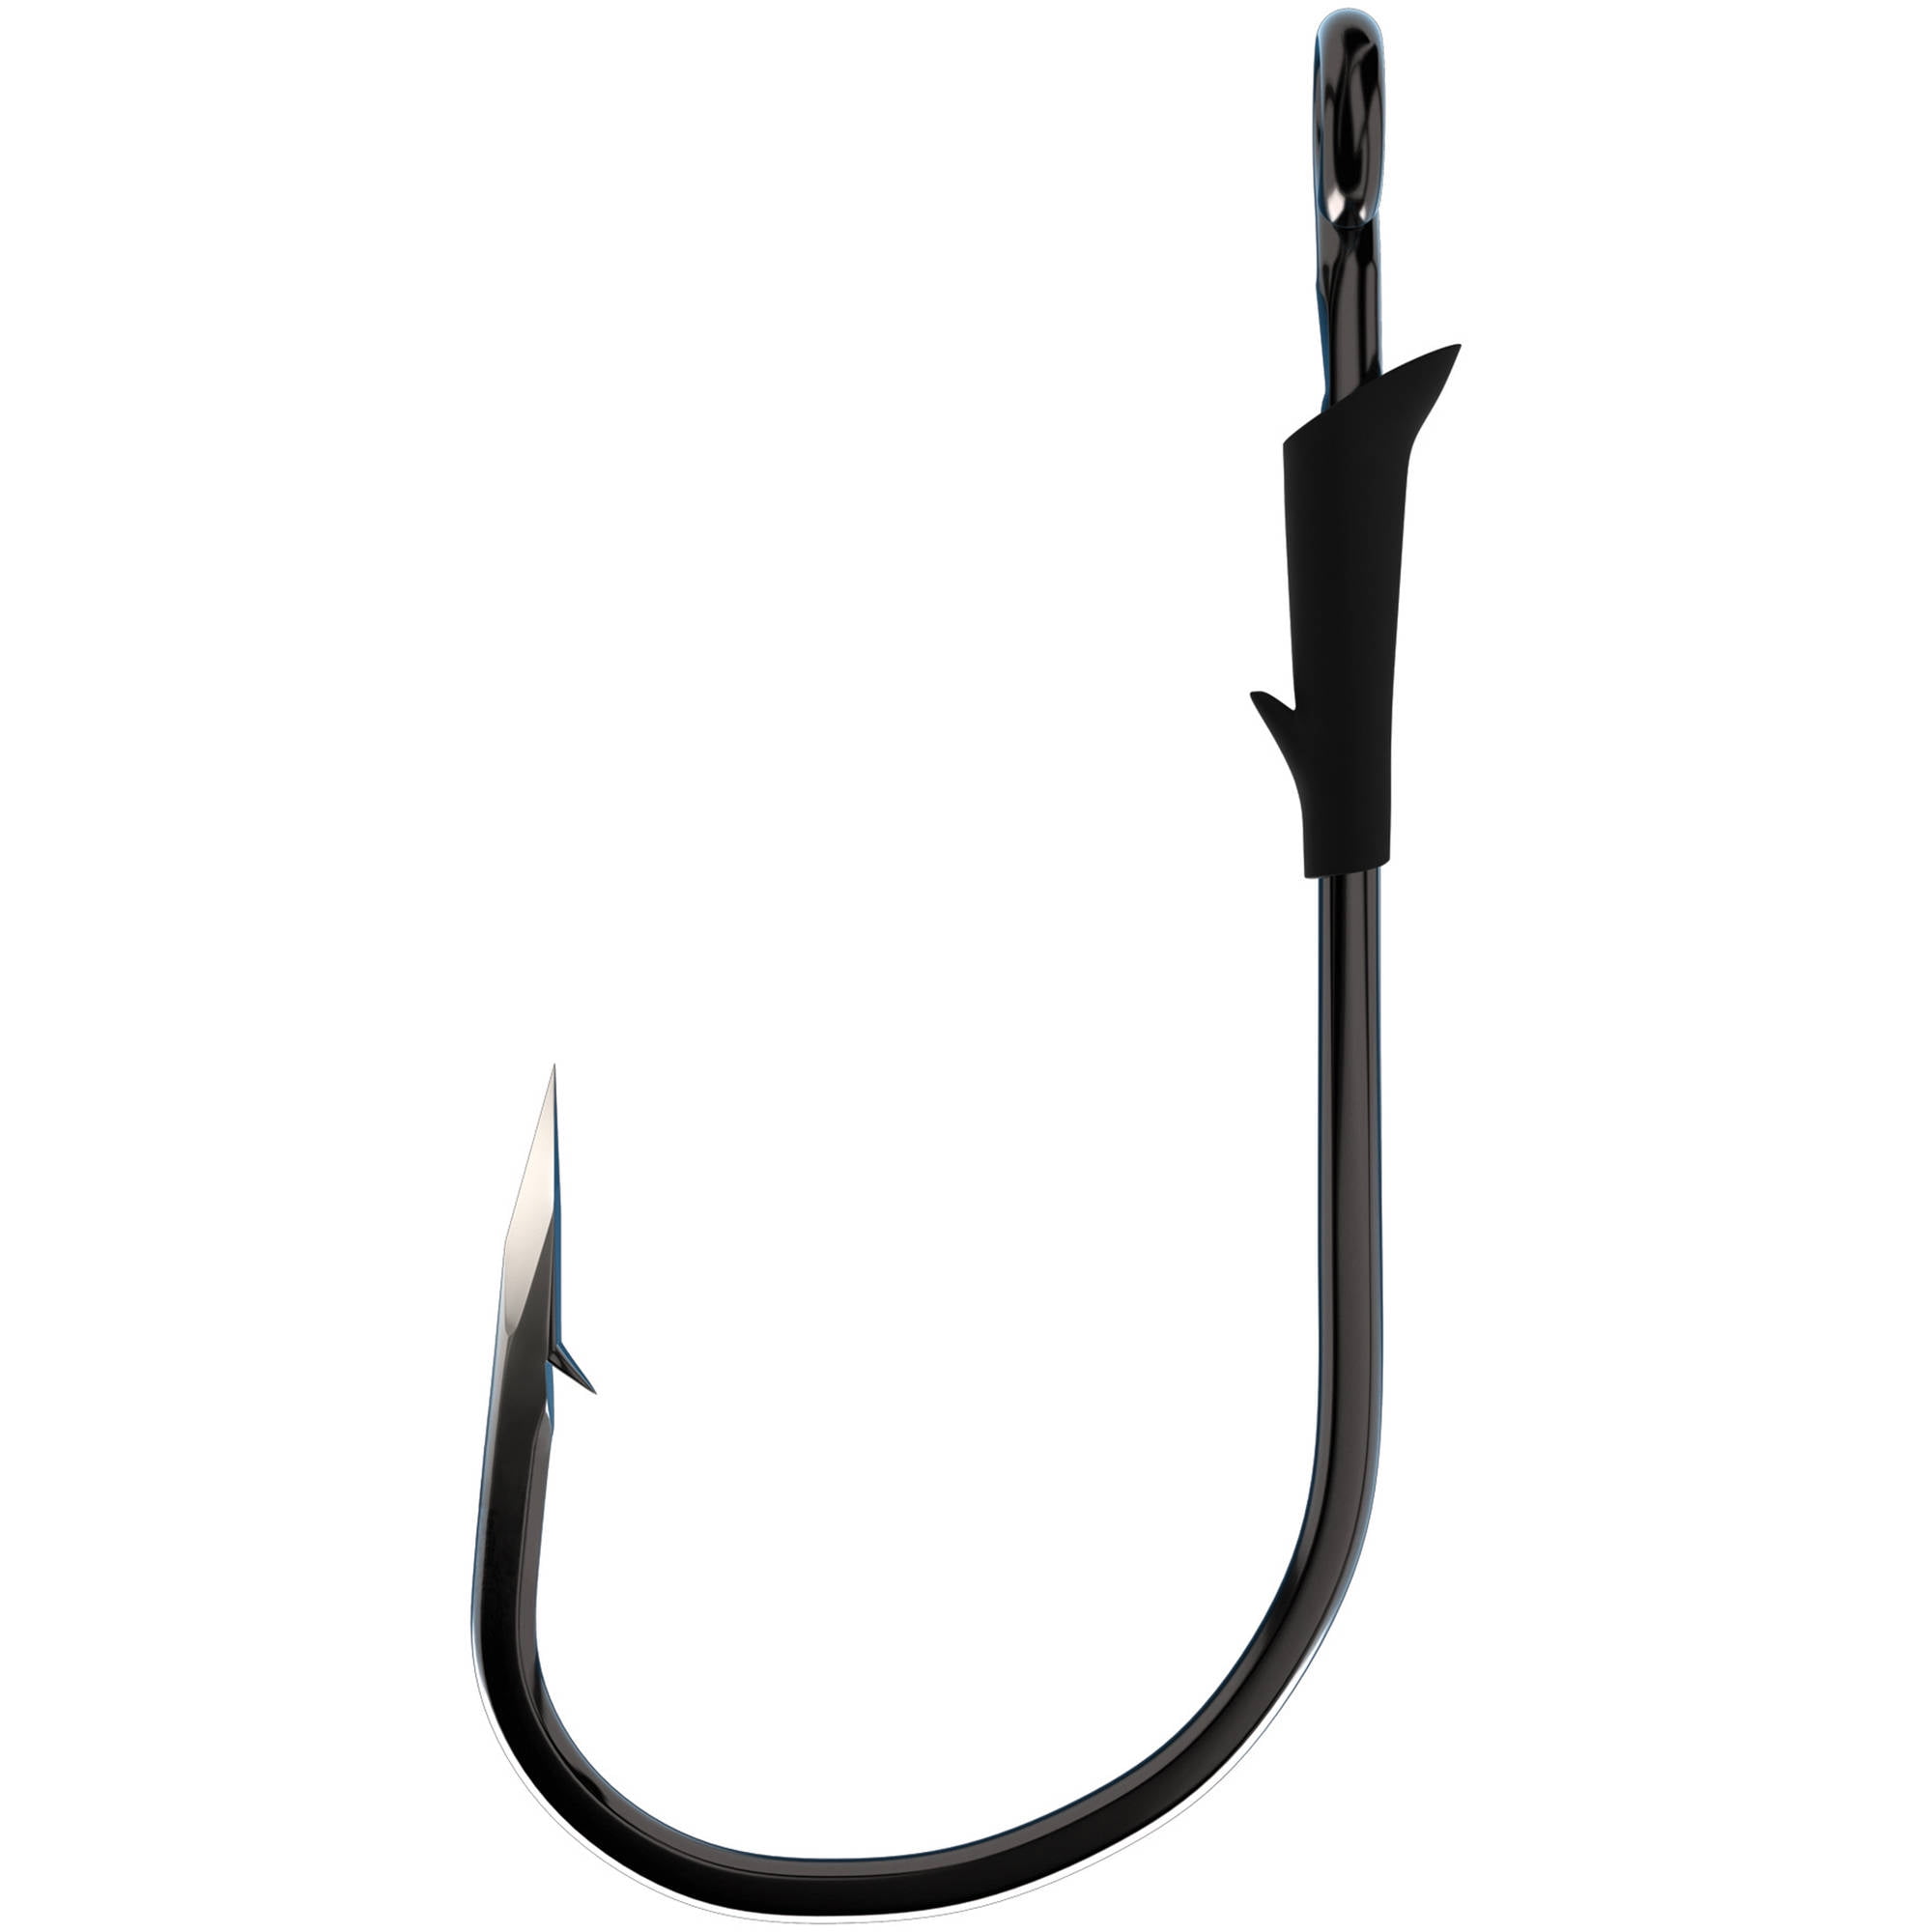 VMC O'Shaughnessy Treble Short 4X Strong Fishing Hooks - Model 9626 -  Coastal Black - 1 - 20 Hooks 